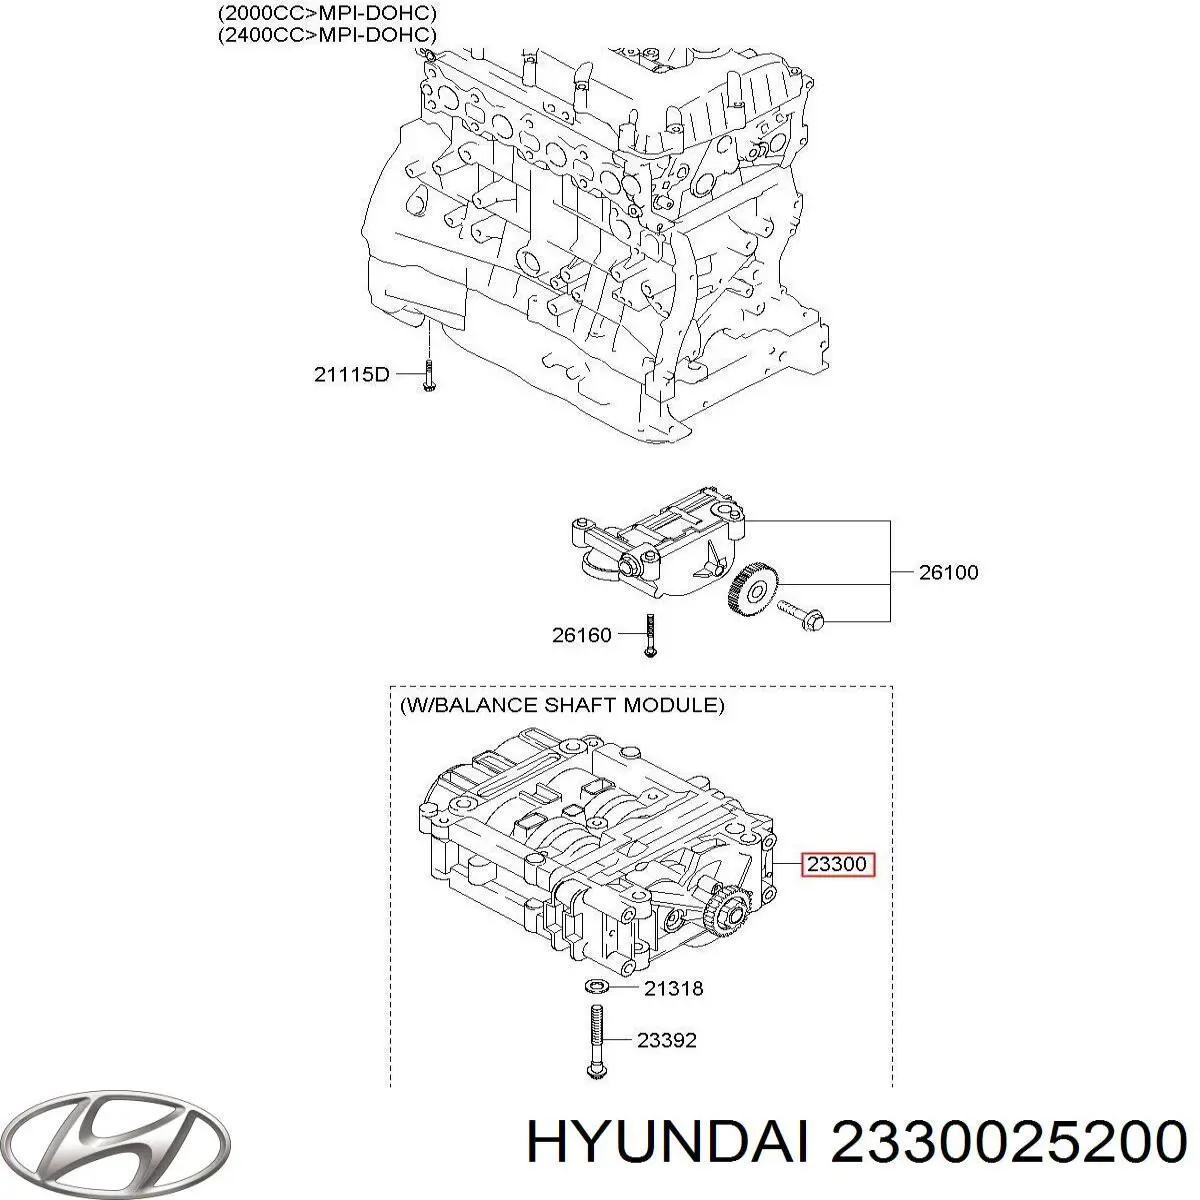 Eje de balanceo Hyundai/Kia 2330025200